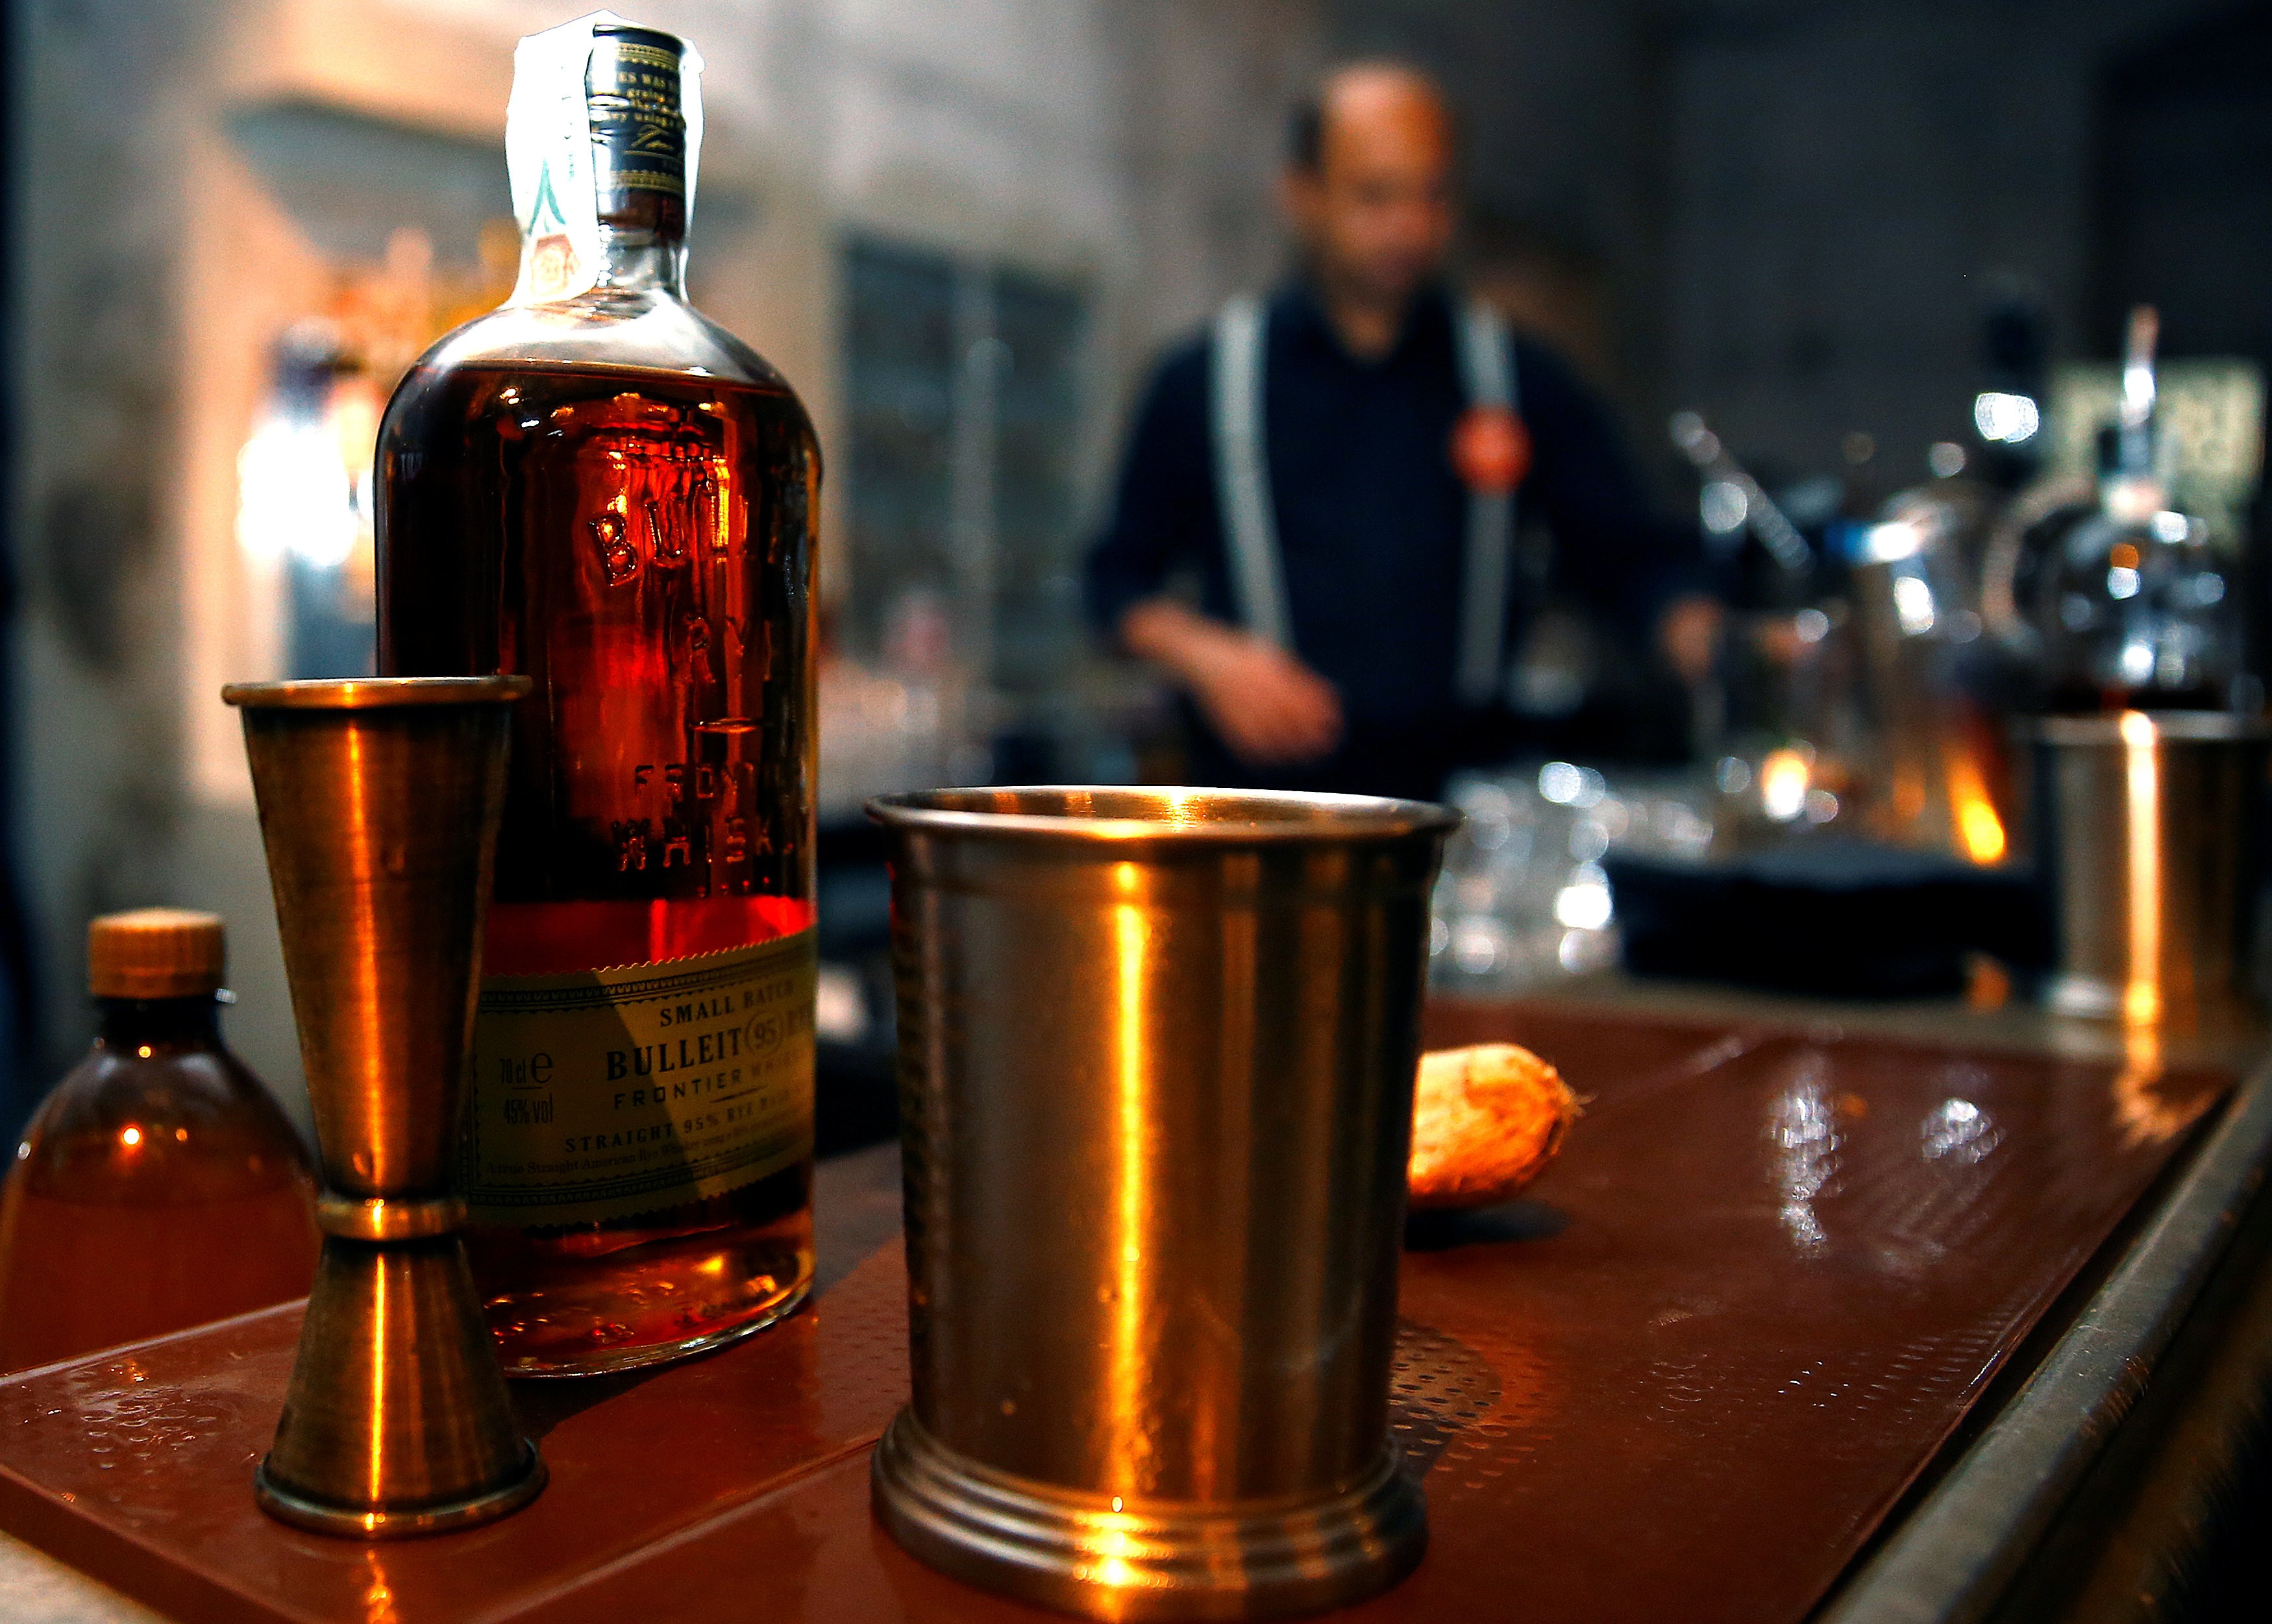 A bottle of Bulleit bourbon whiskey. Photo: Reuters